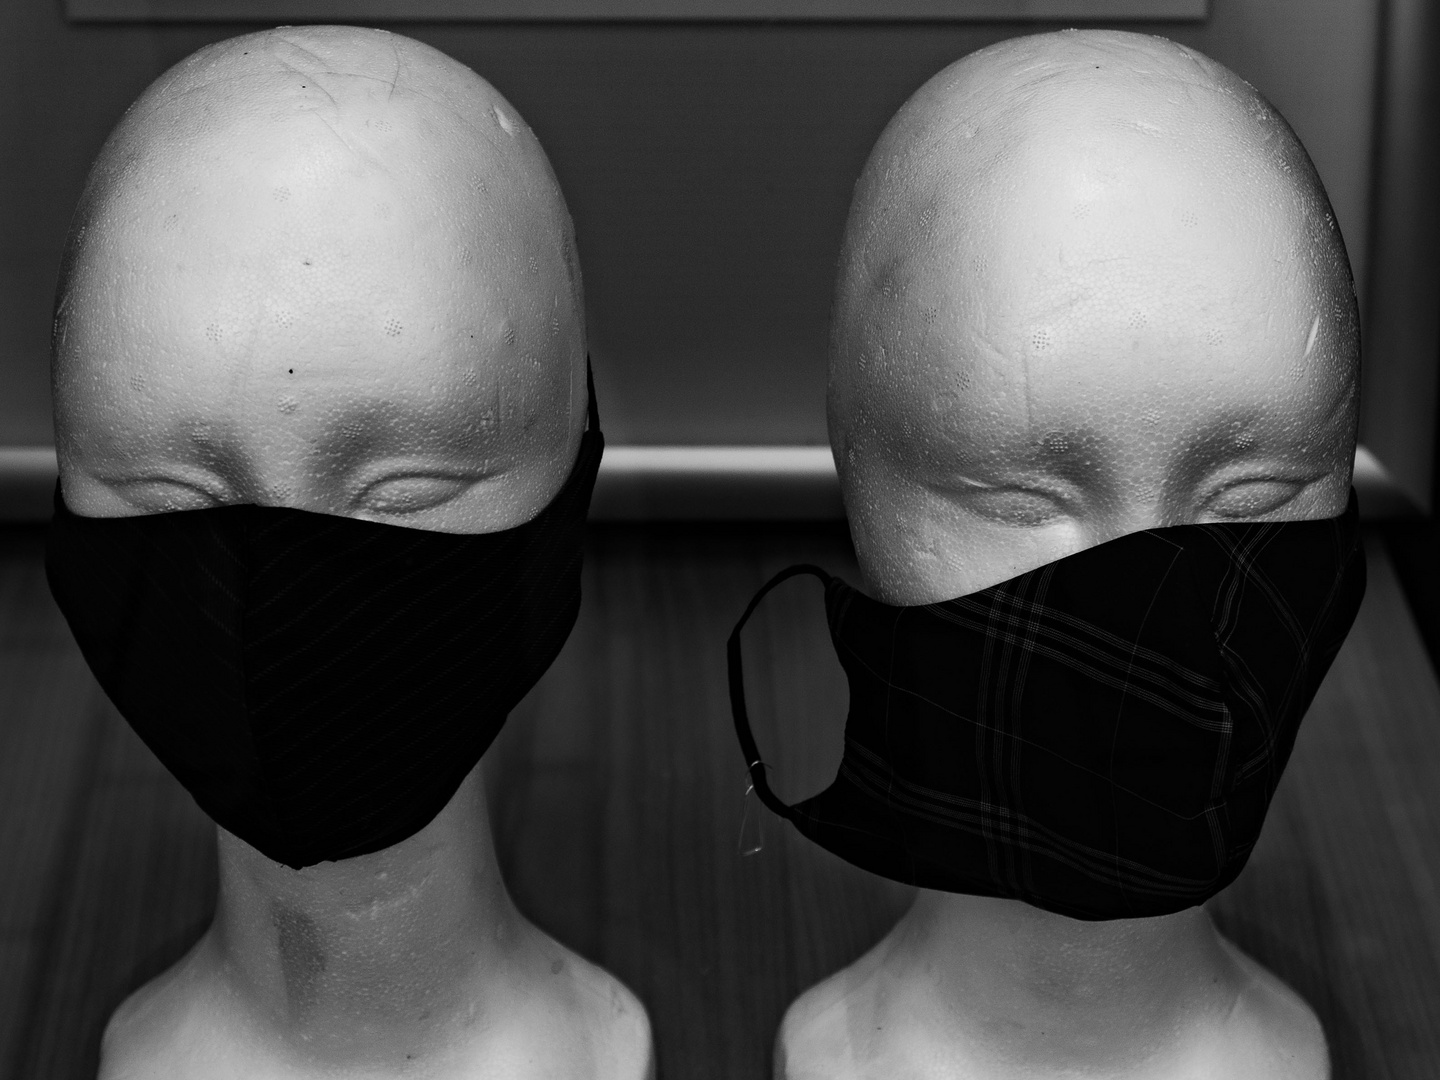 Masked aliens